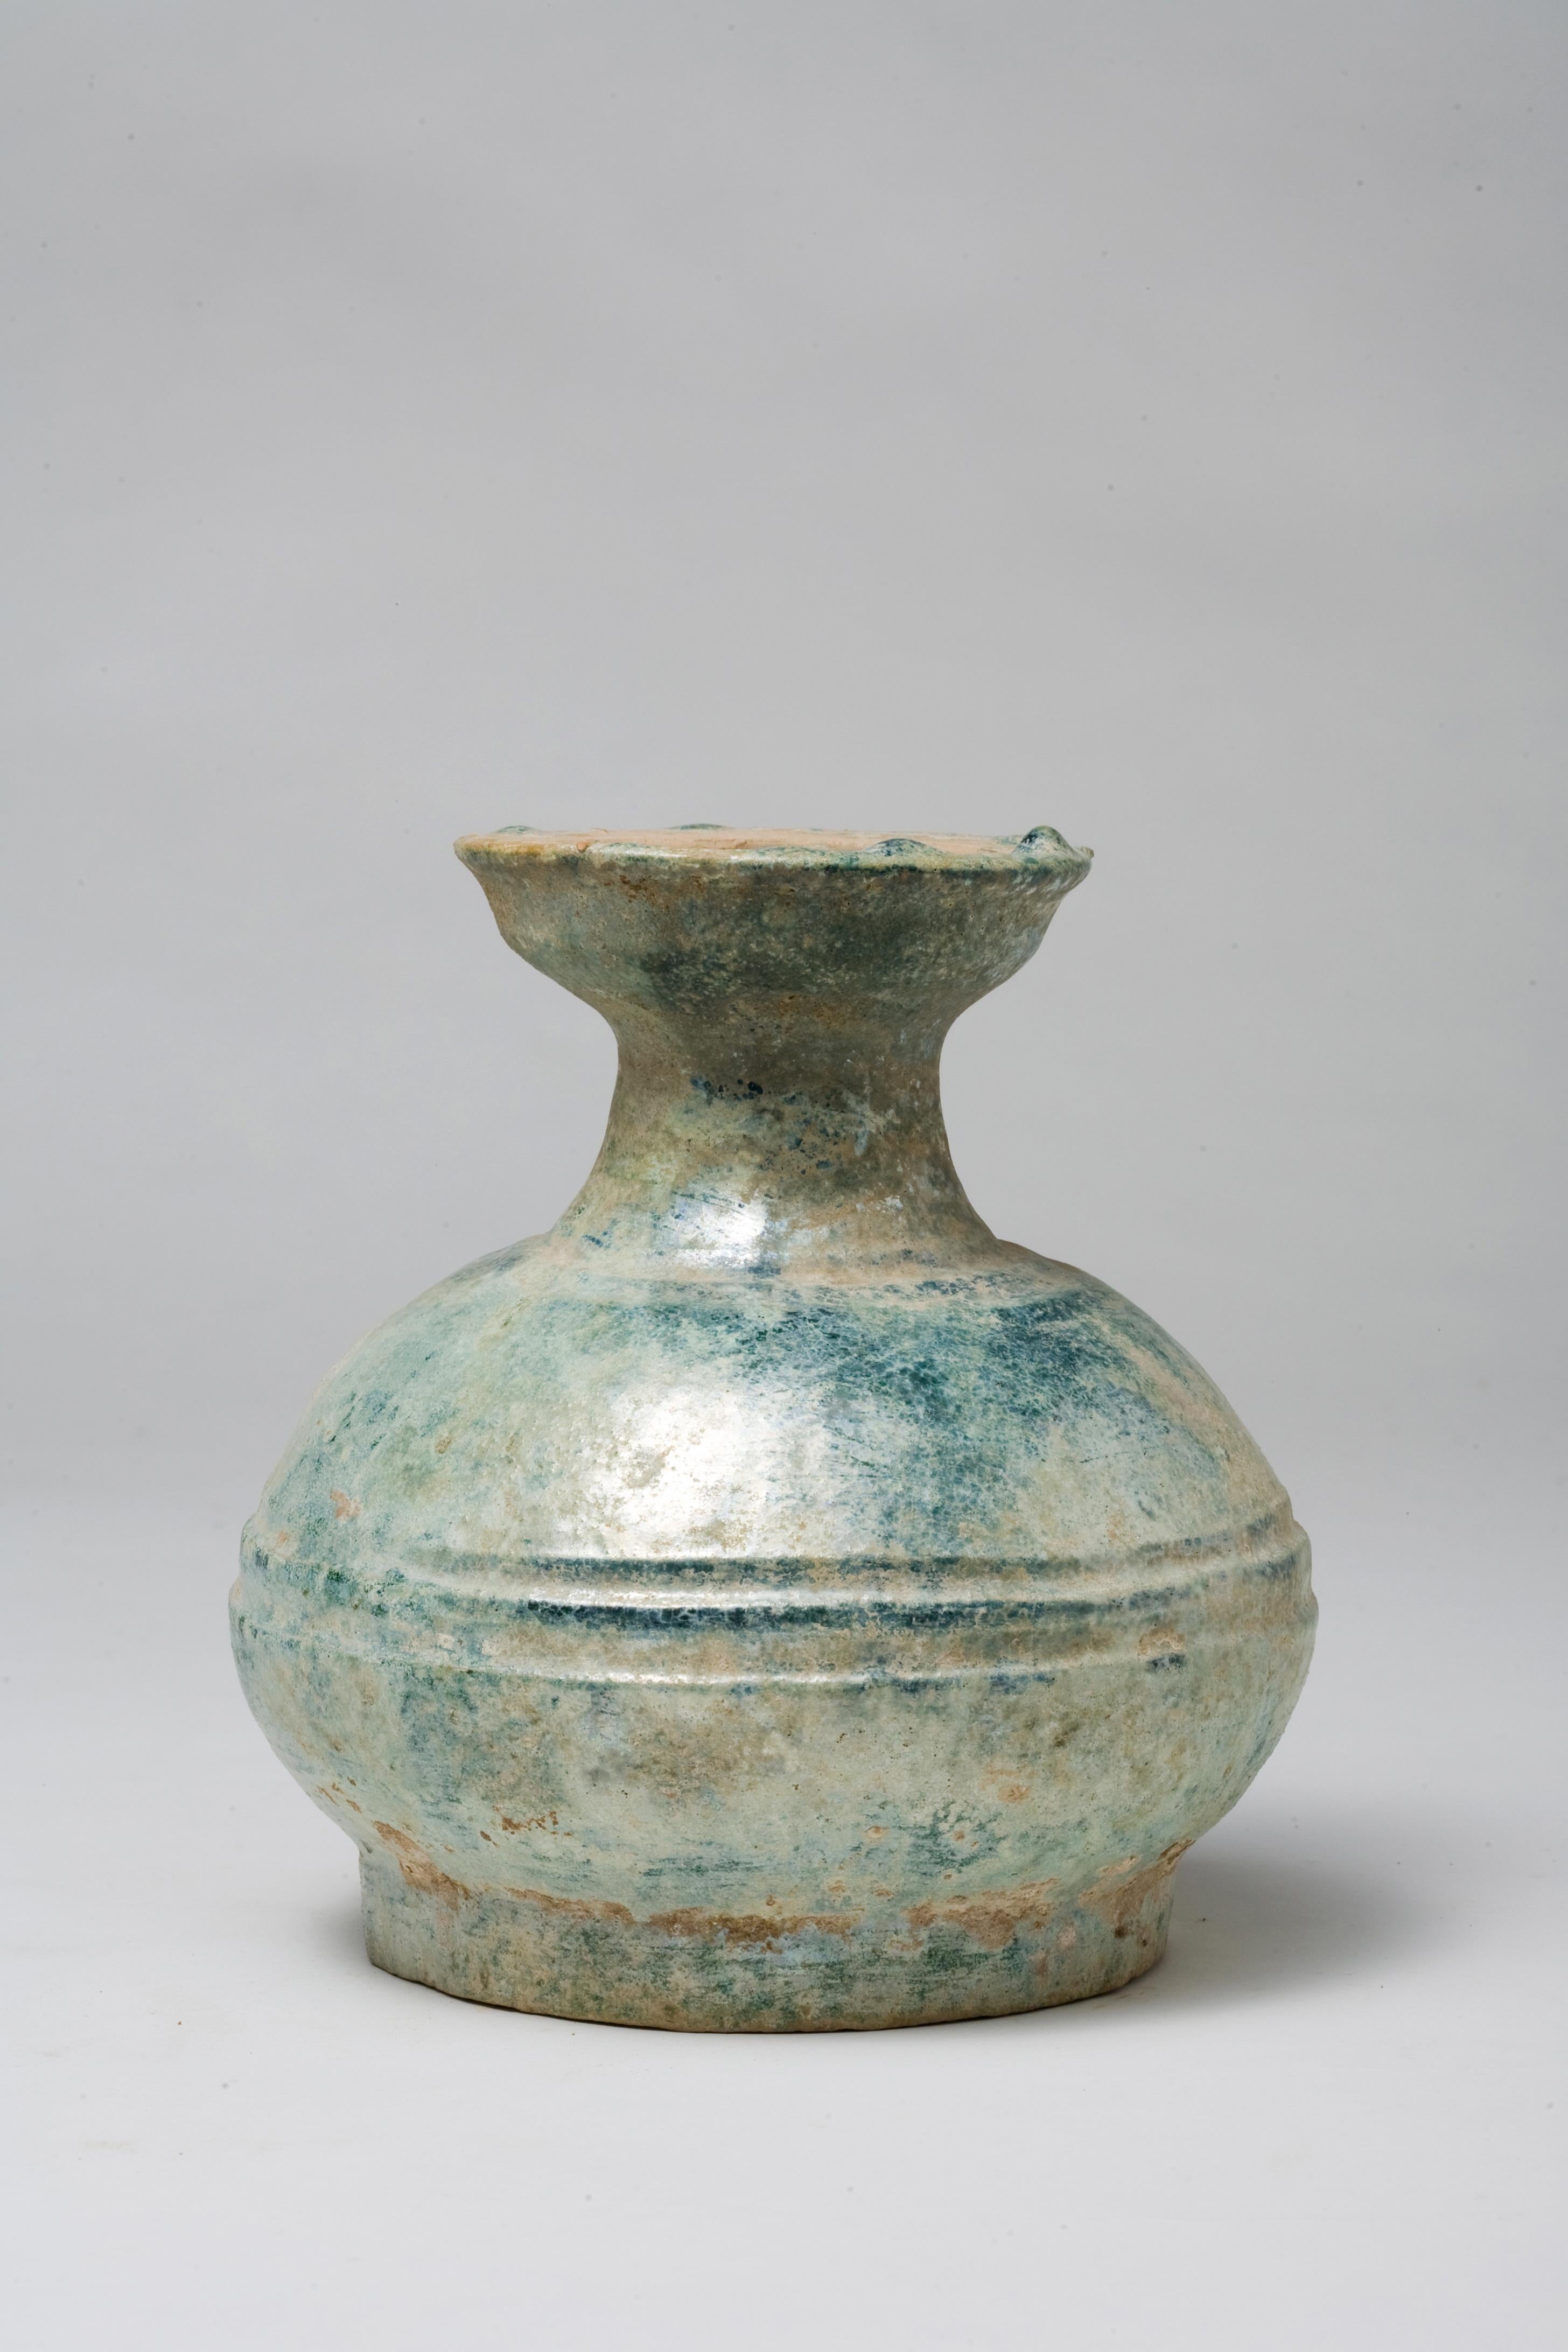 Hu Shape Green-Glazed Vase, Han Dynasty(206 BC - 220 AD) For Sale 7